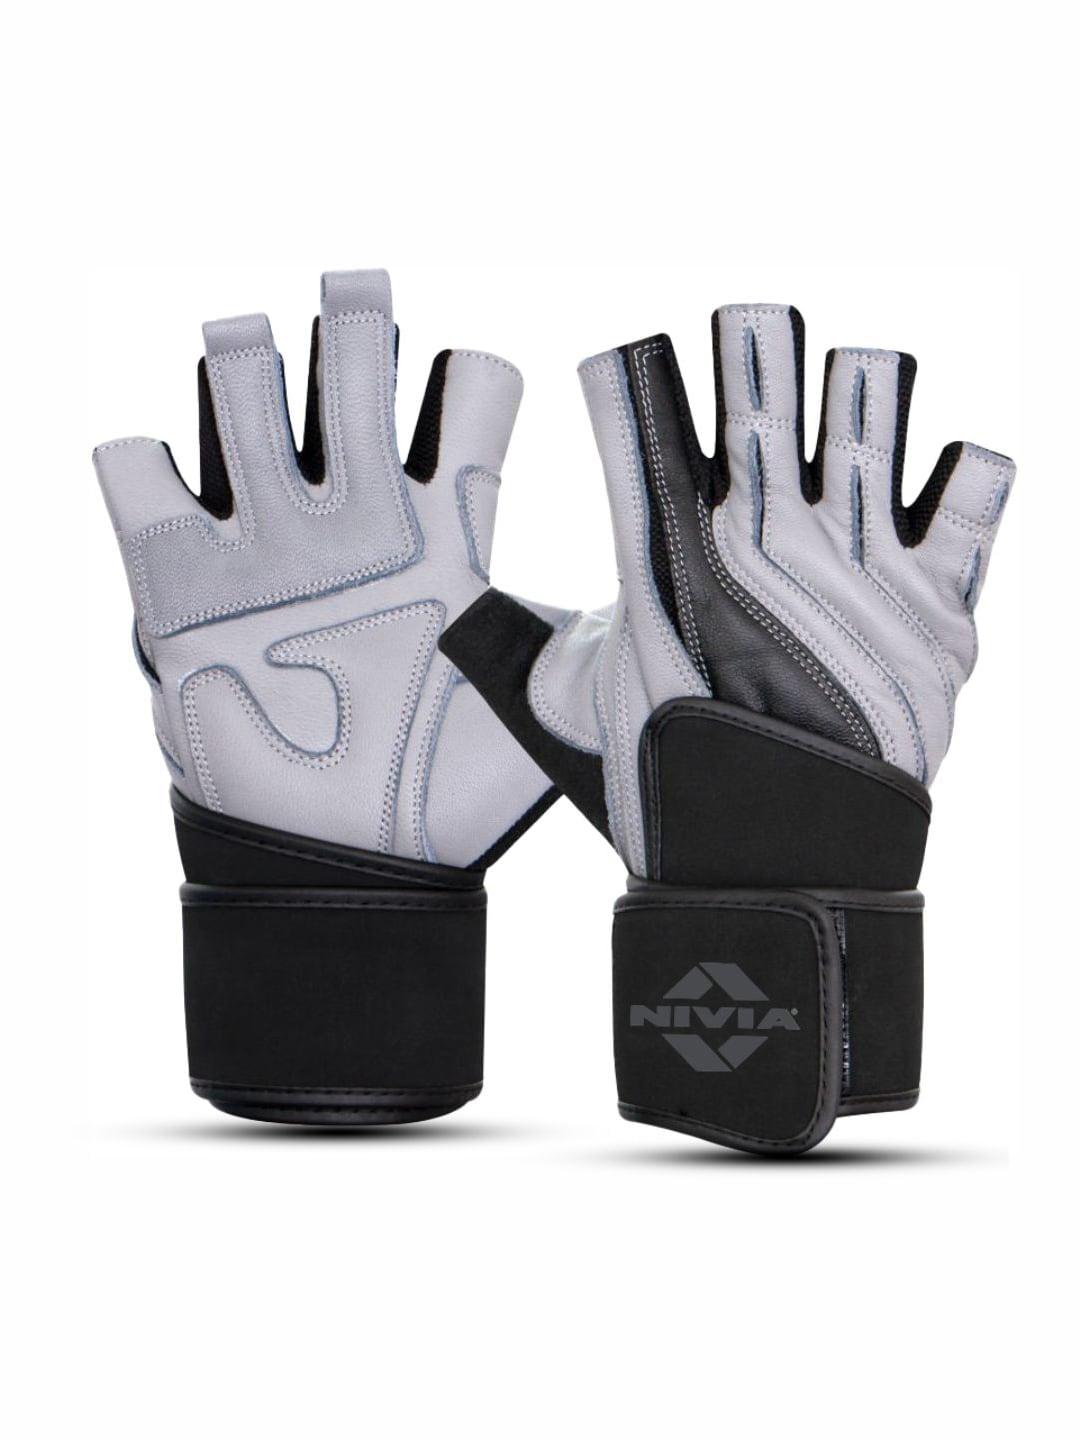 nivia wrist grip genuine leather gym gloves